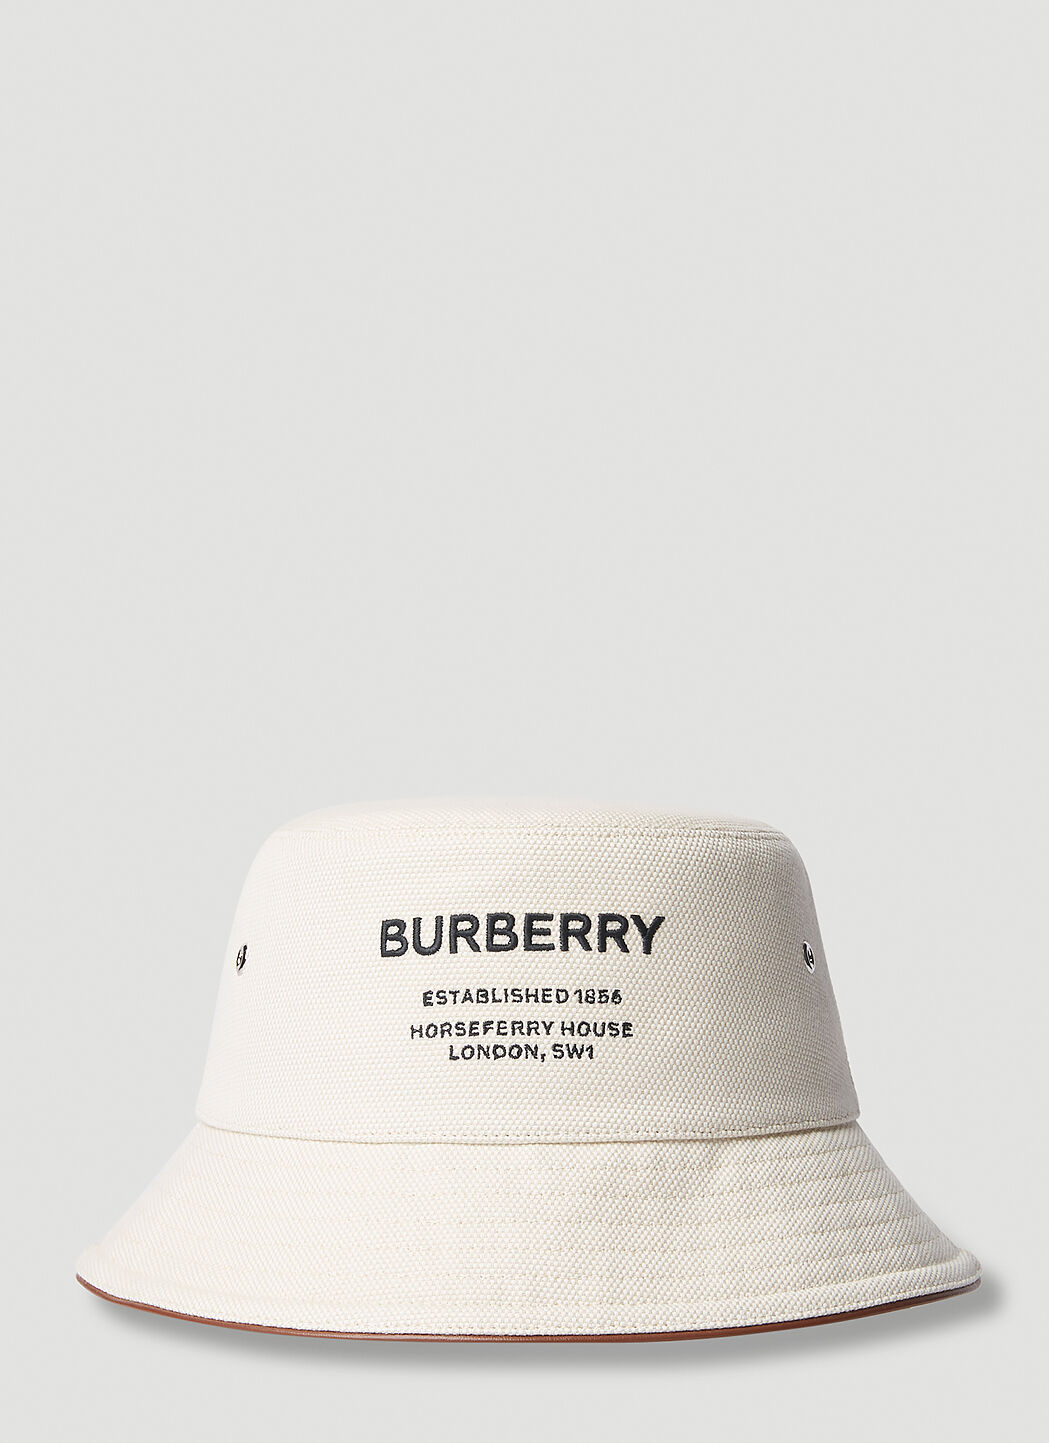 Burberry Horseferry Bucket Hat Brown bur0253100